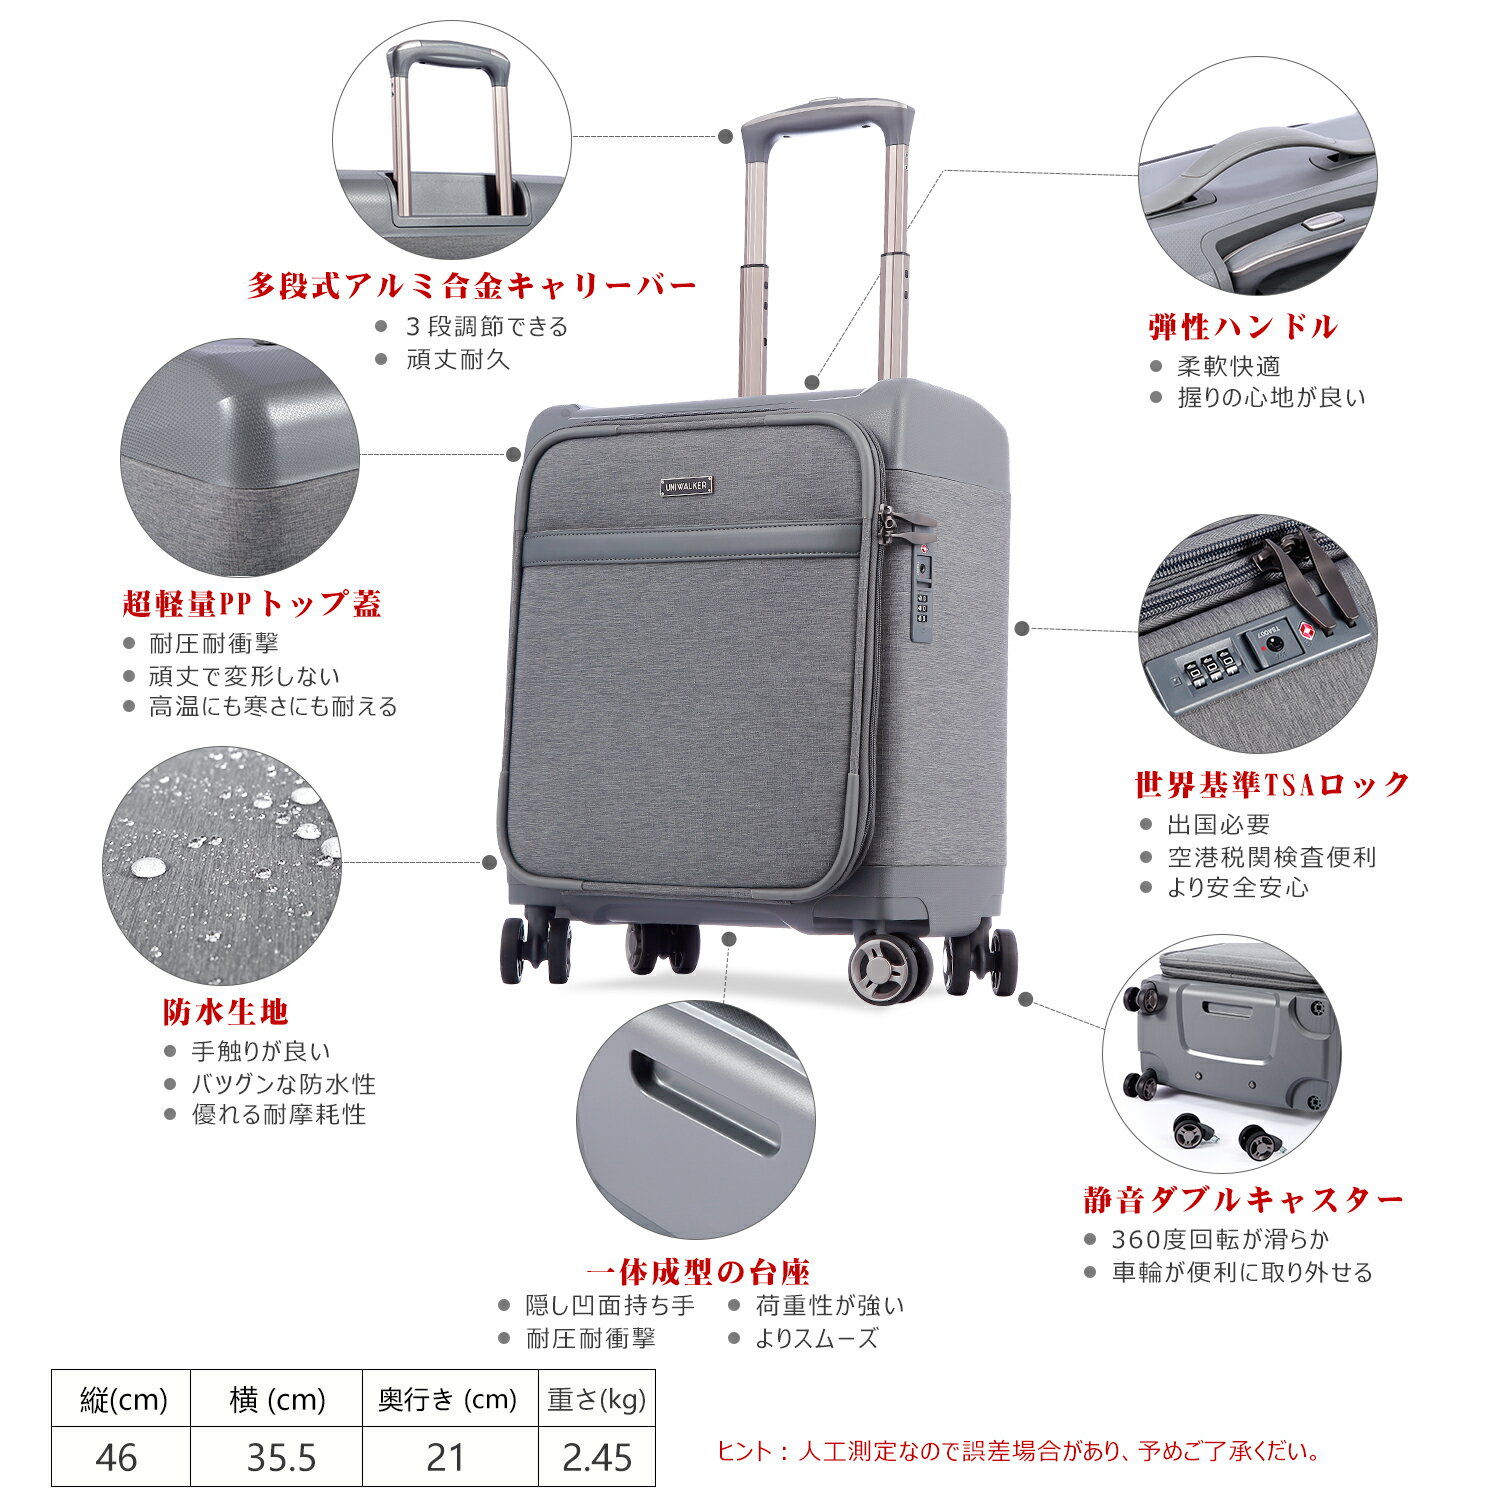 Uniwalker『スーツケース』